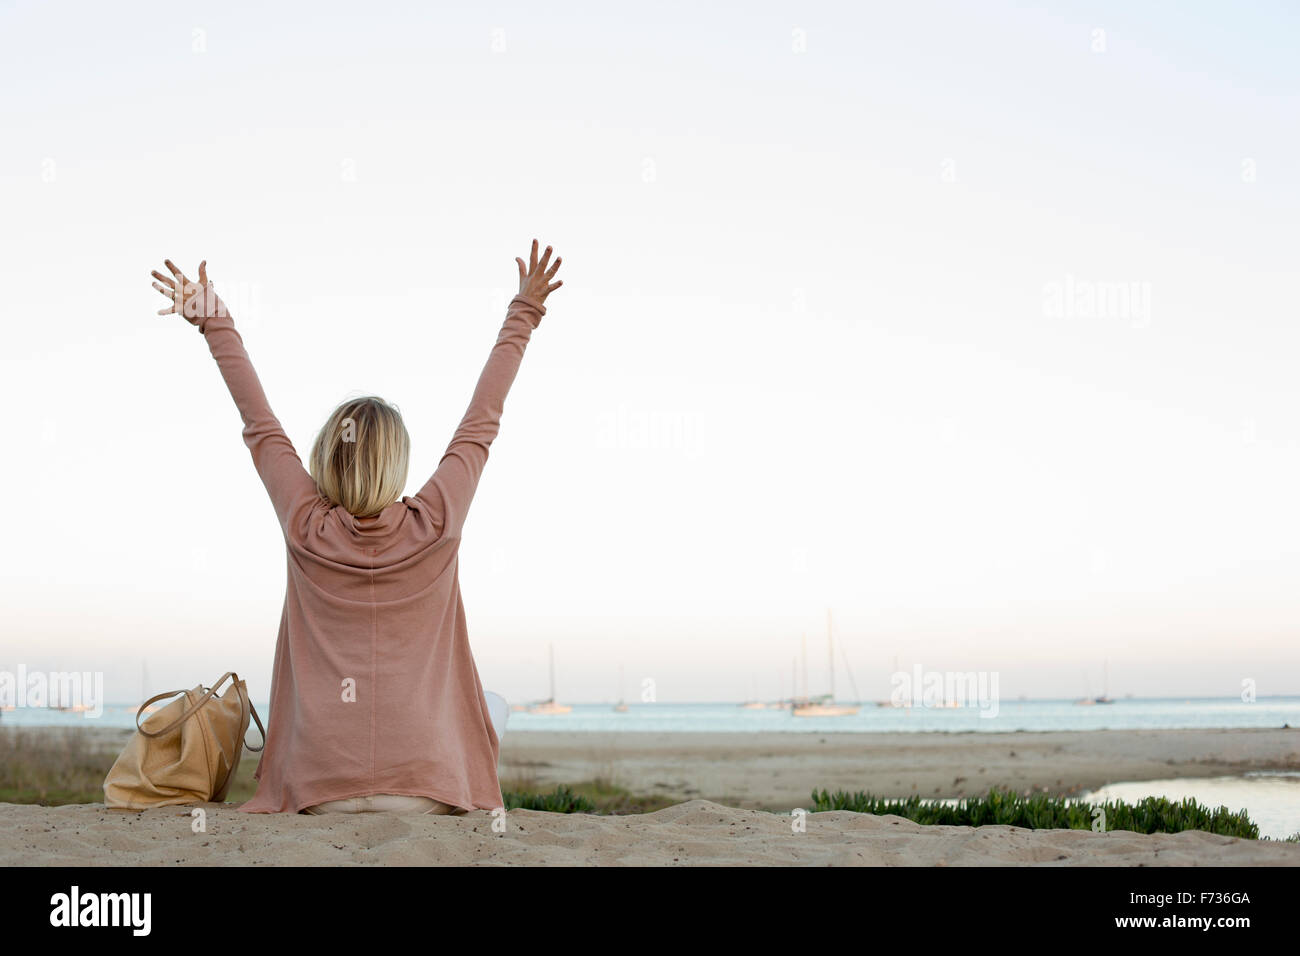 Blond woman sitting on a sandy beach, arms raised. Stock Photo